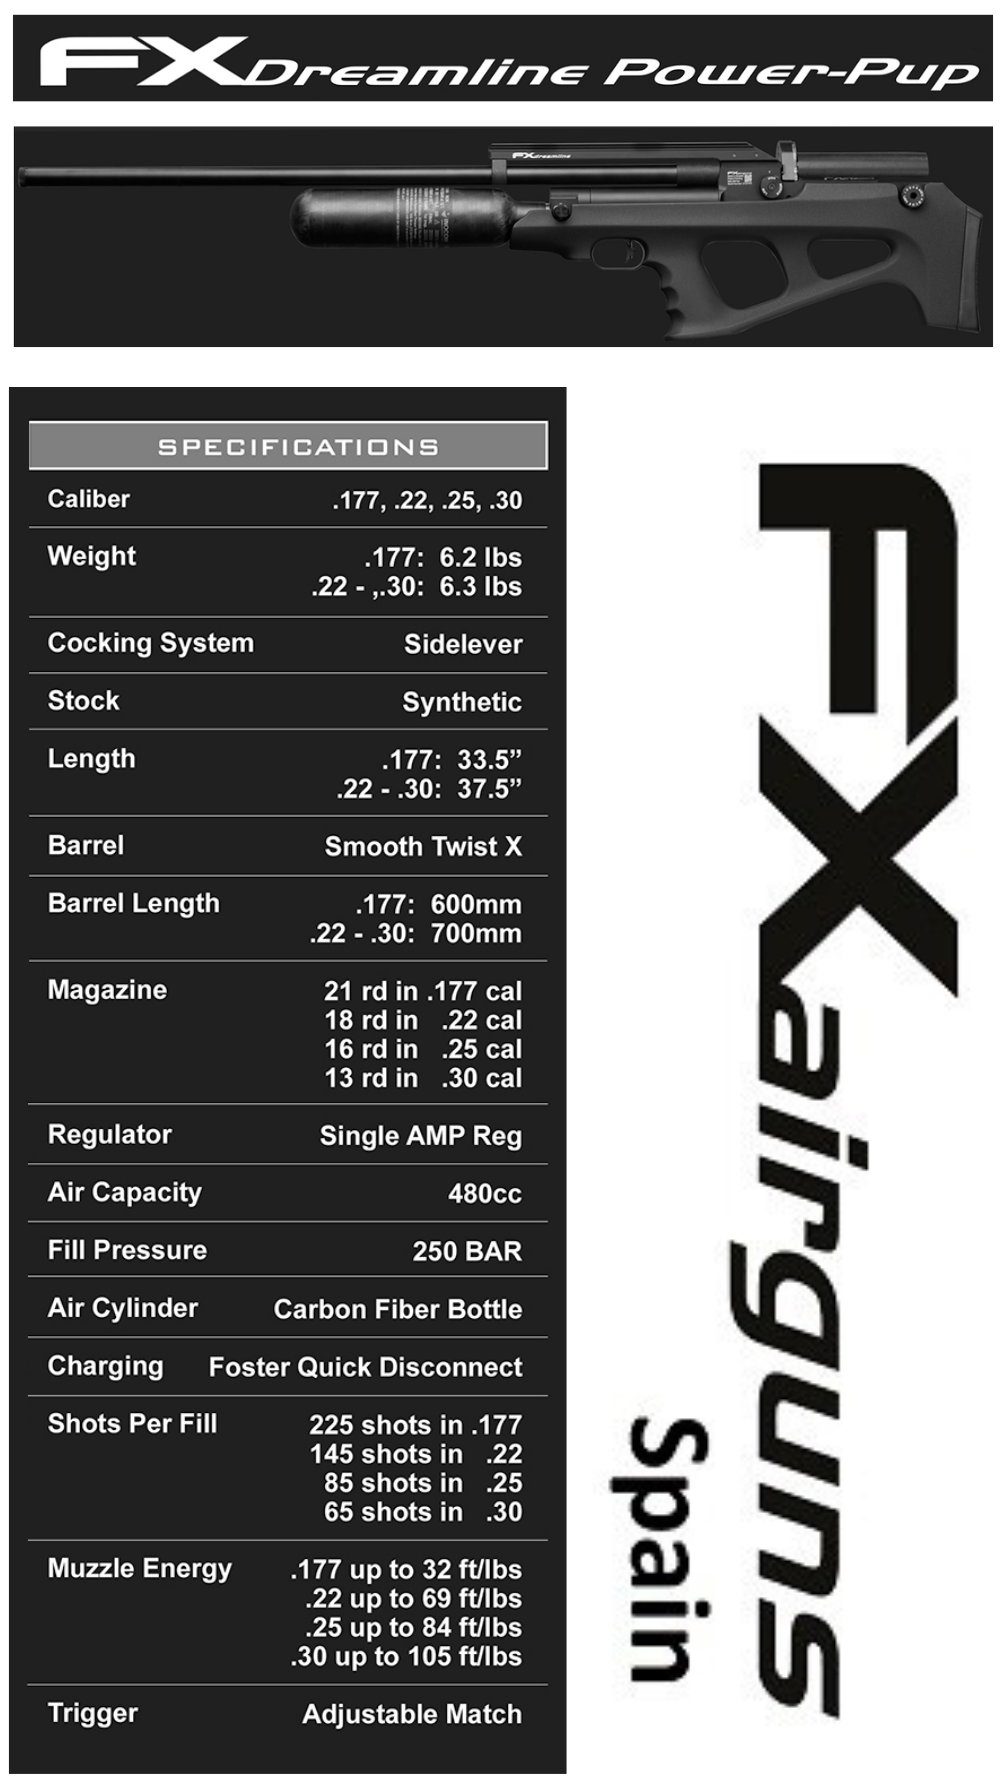 Características de la carabina de aire: FX Dreamline Power-Pup de FX Airguns